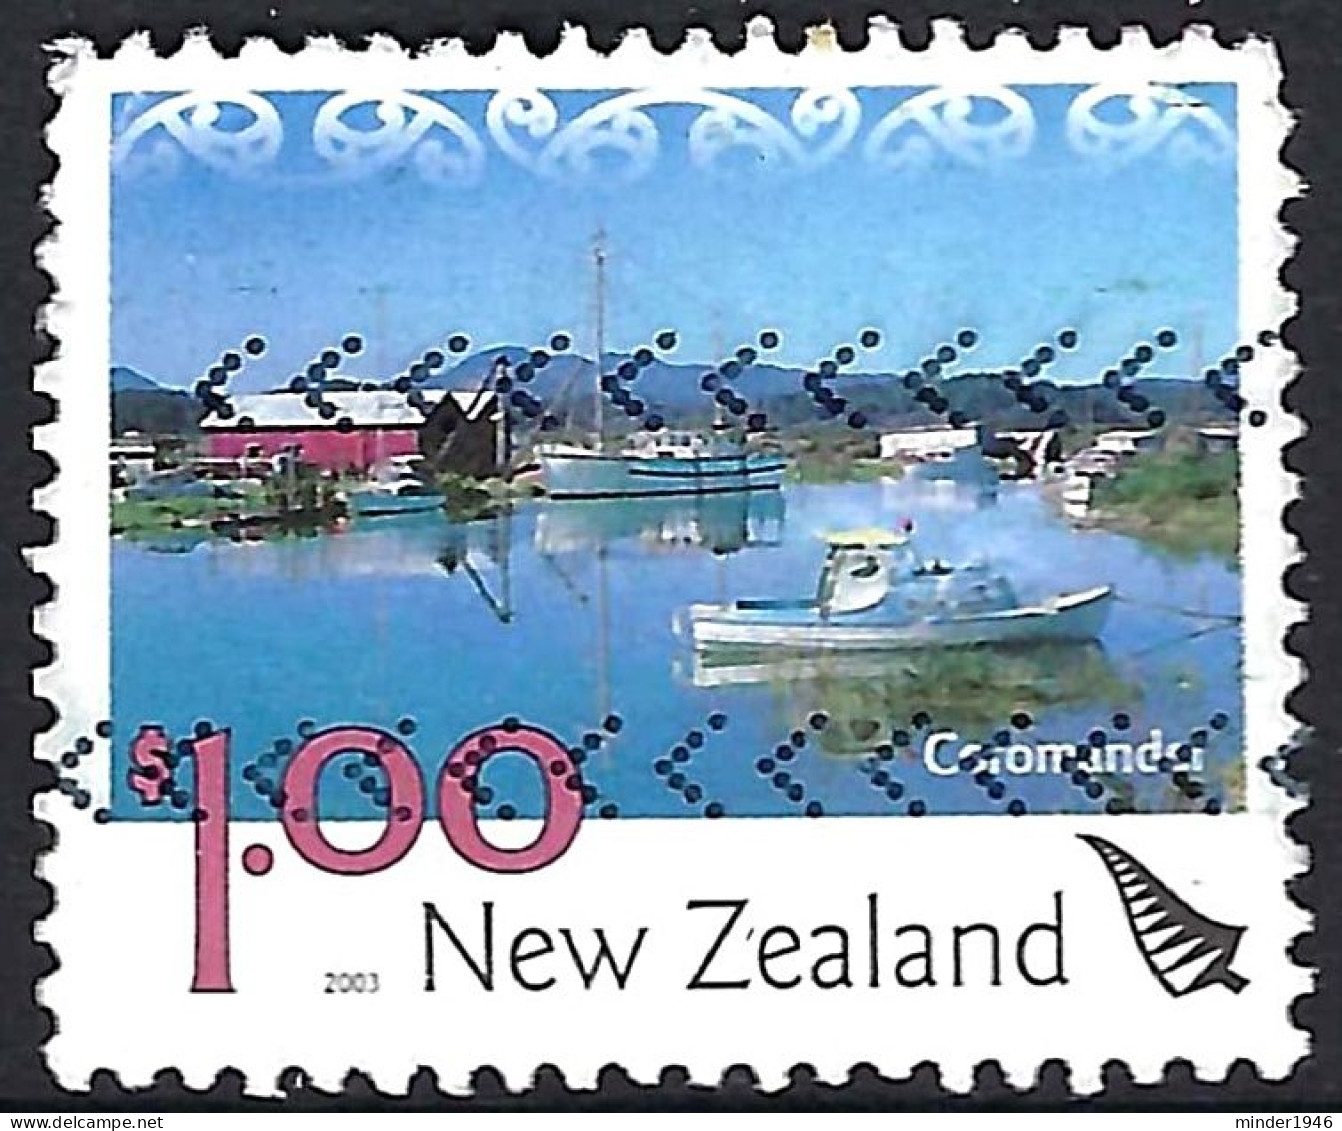 NEW ZEALAND 2003 QEII $1 Multicoloured, Scenery-Coromandel FU - Usados